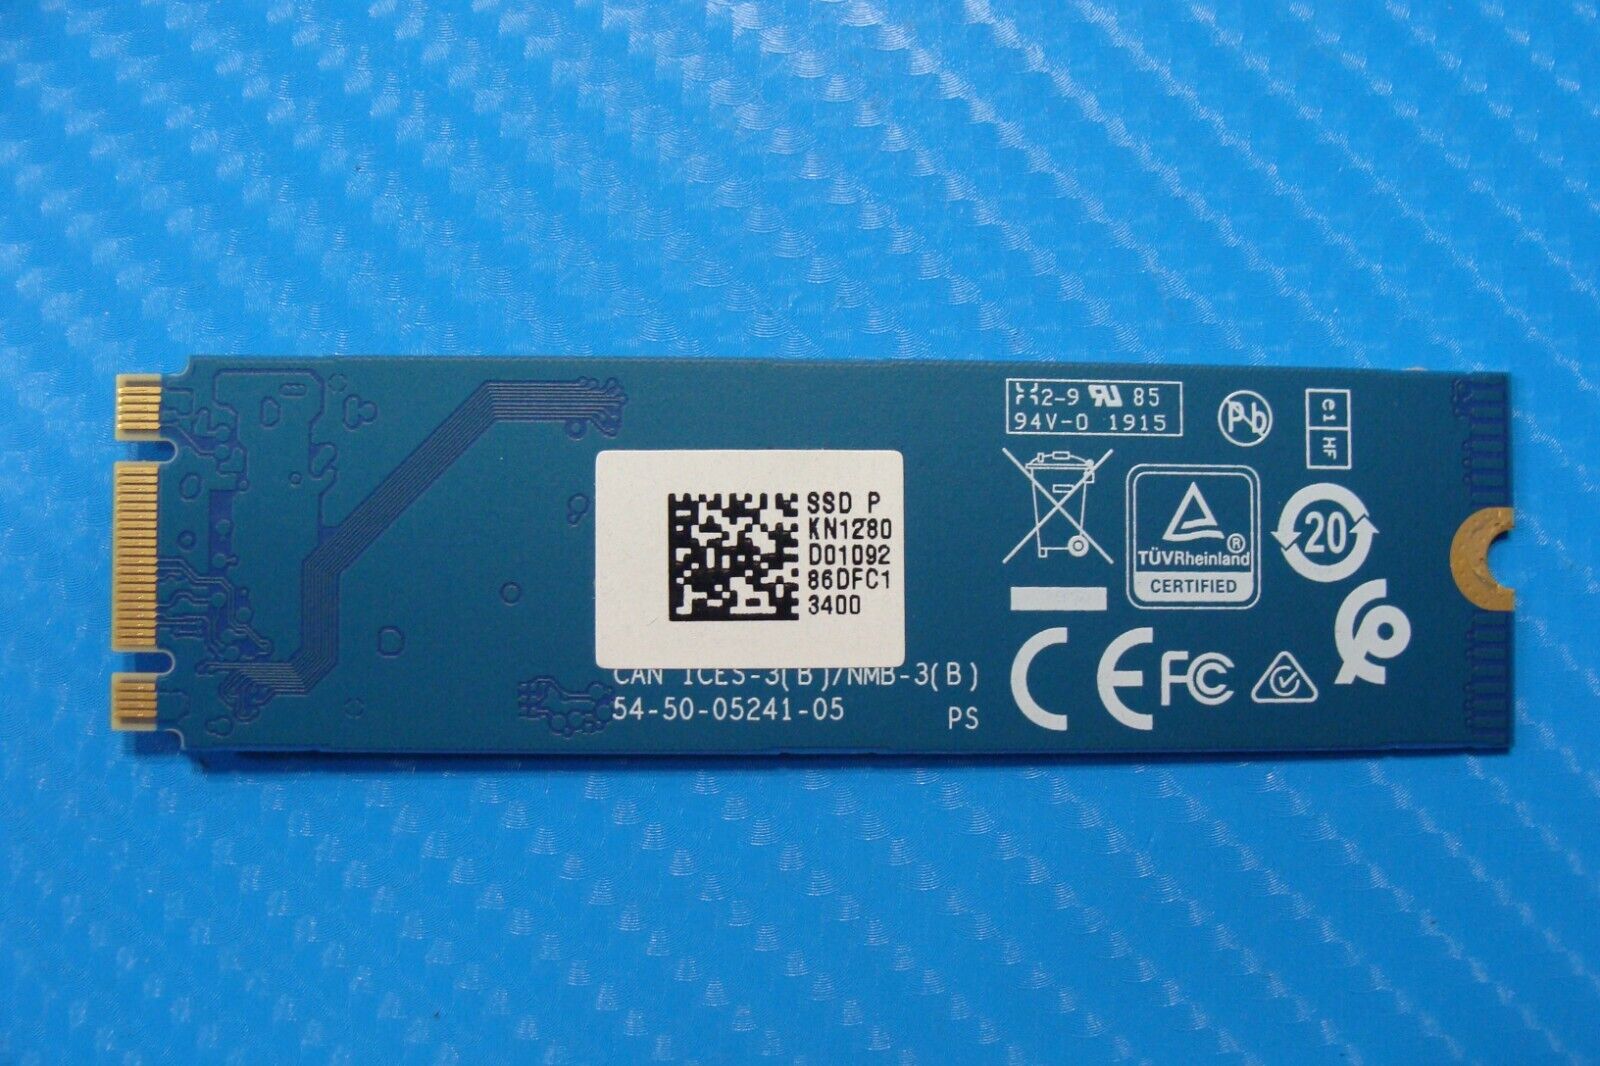 Acer A515-43-R19L WD 128GB SATA M.2 SSD Solid State Drive SDAPNUW-128G-1014